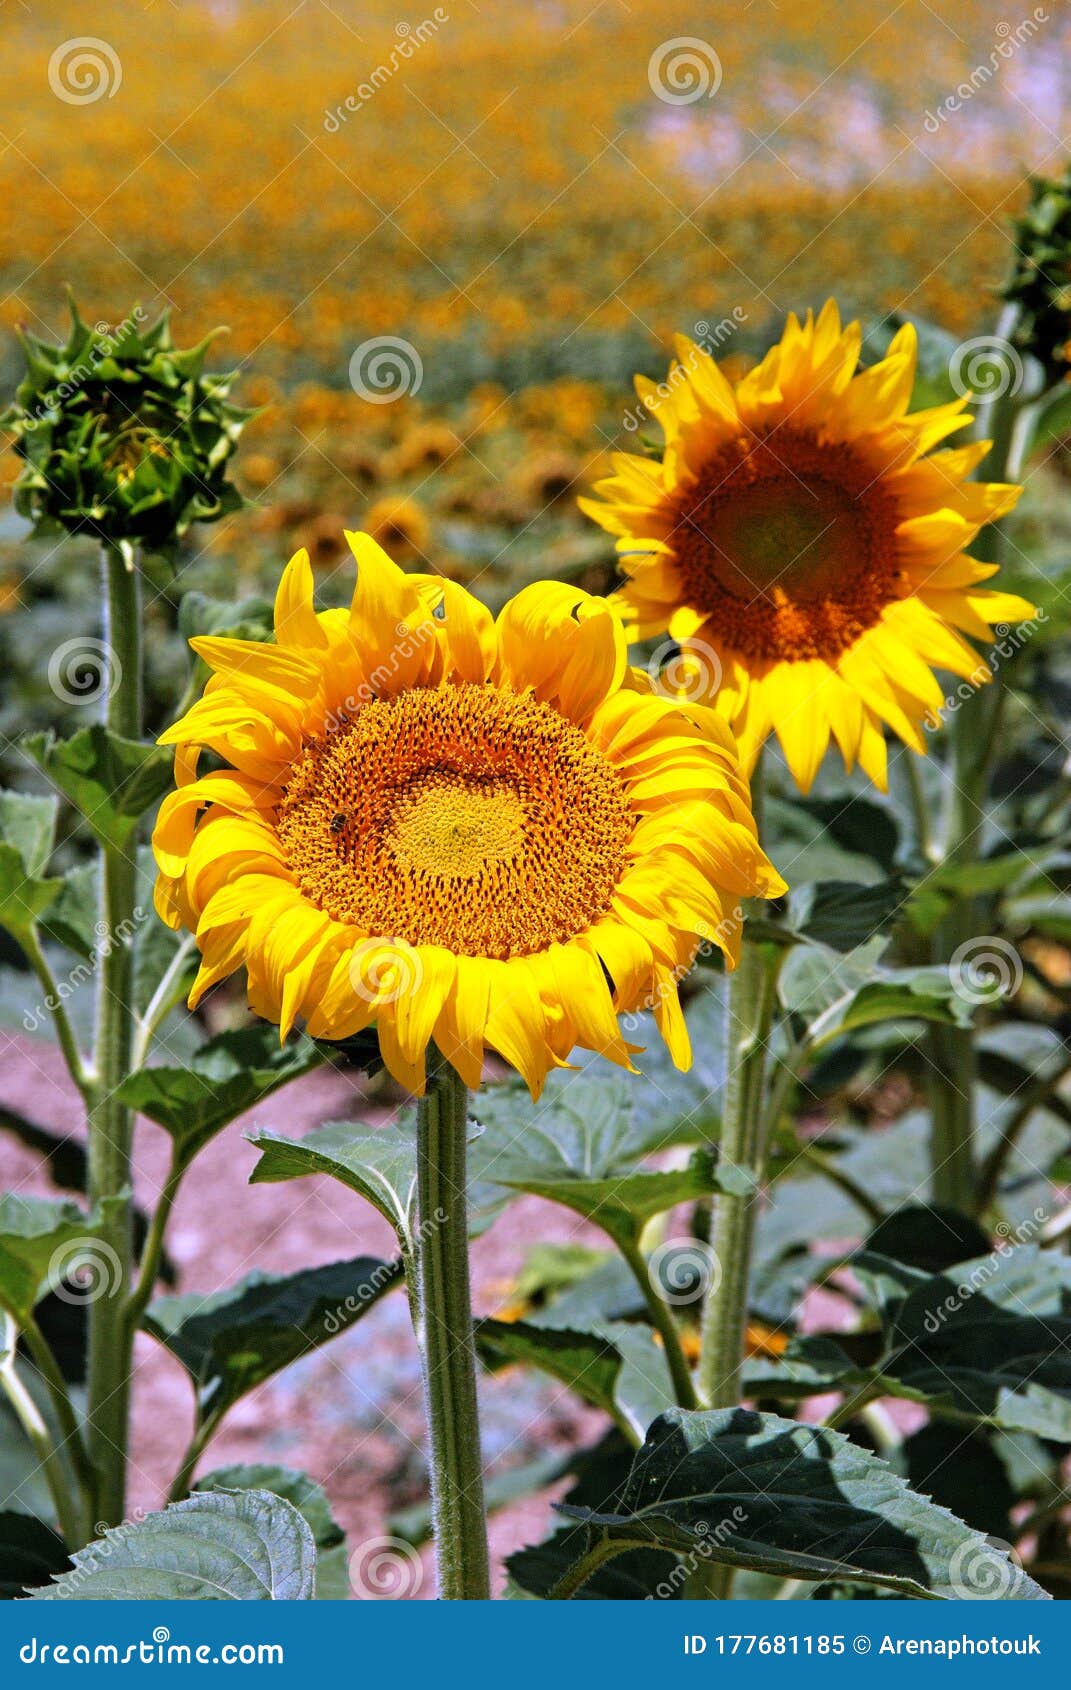 pretty sunflowers, medina sidonia, spain.